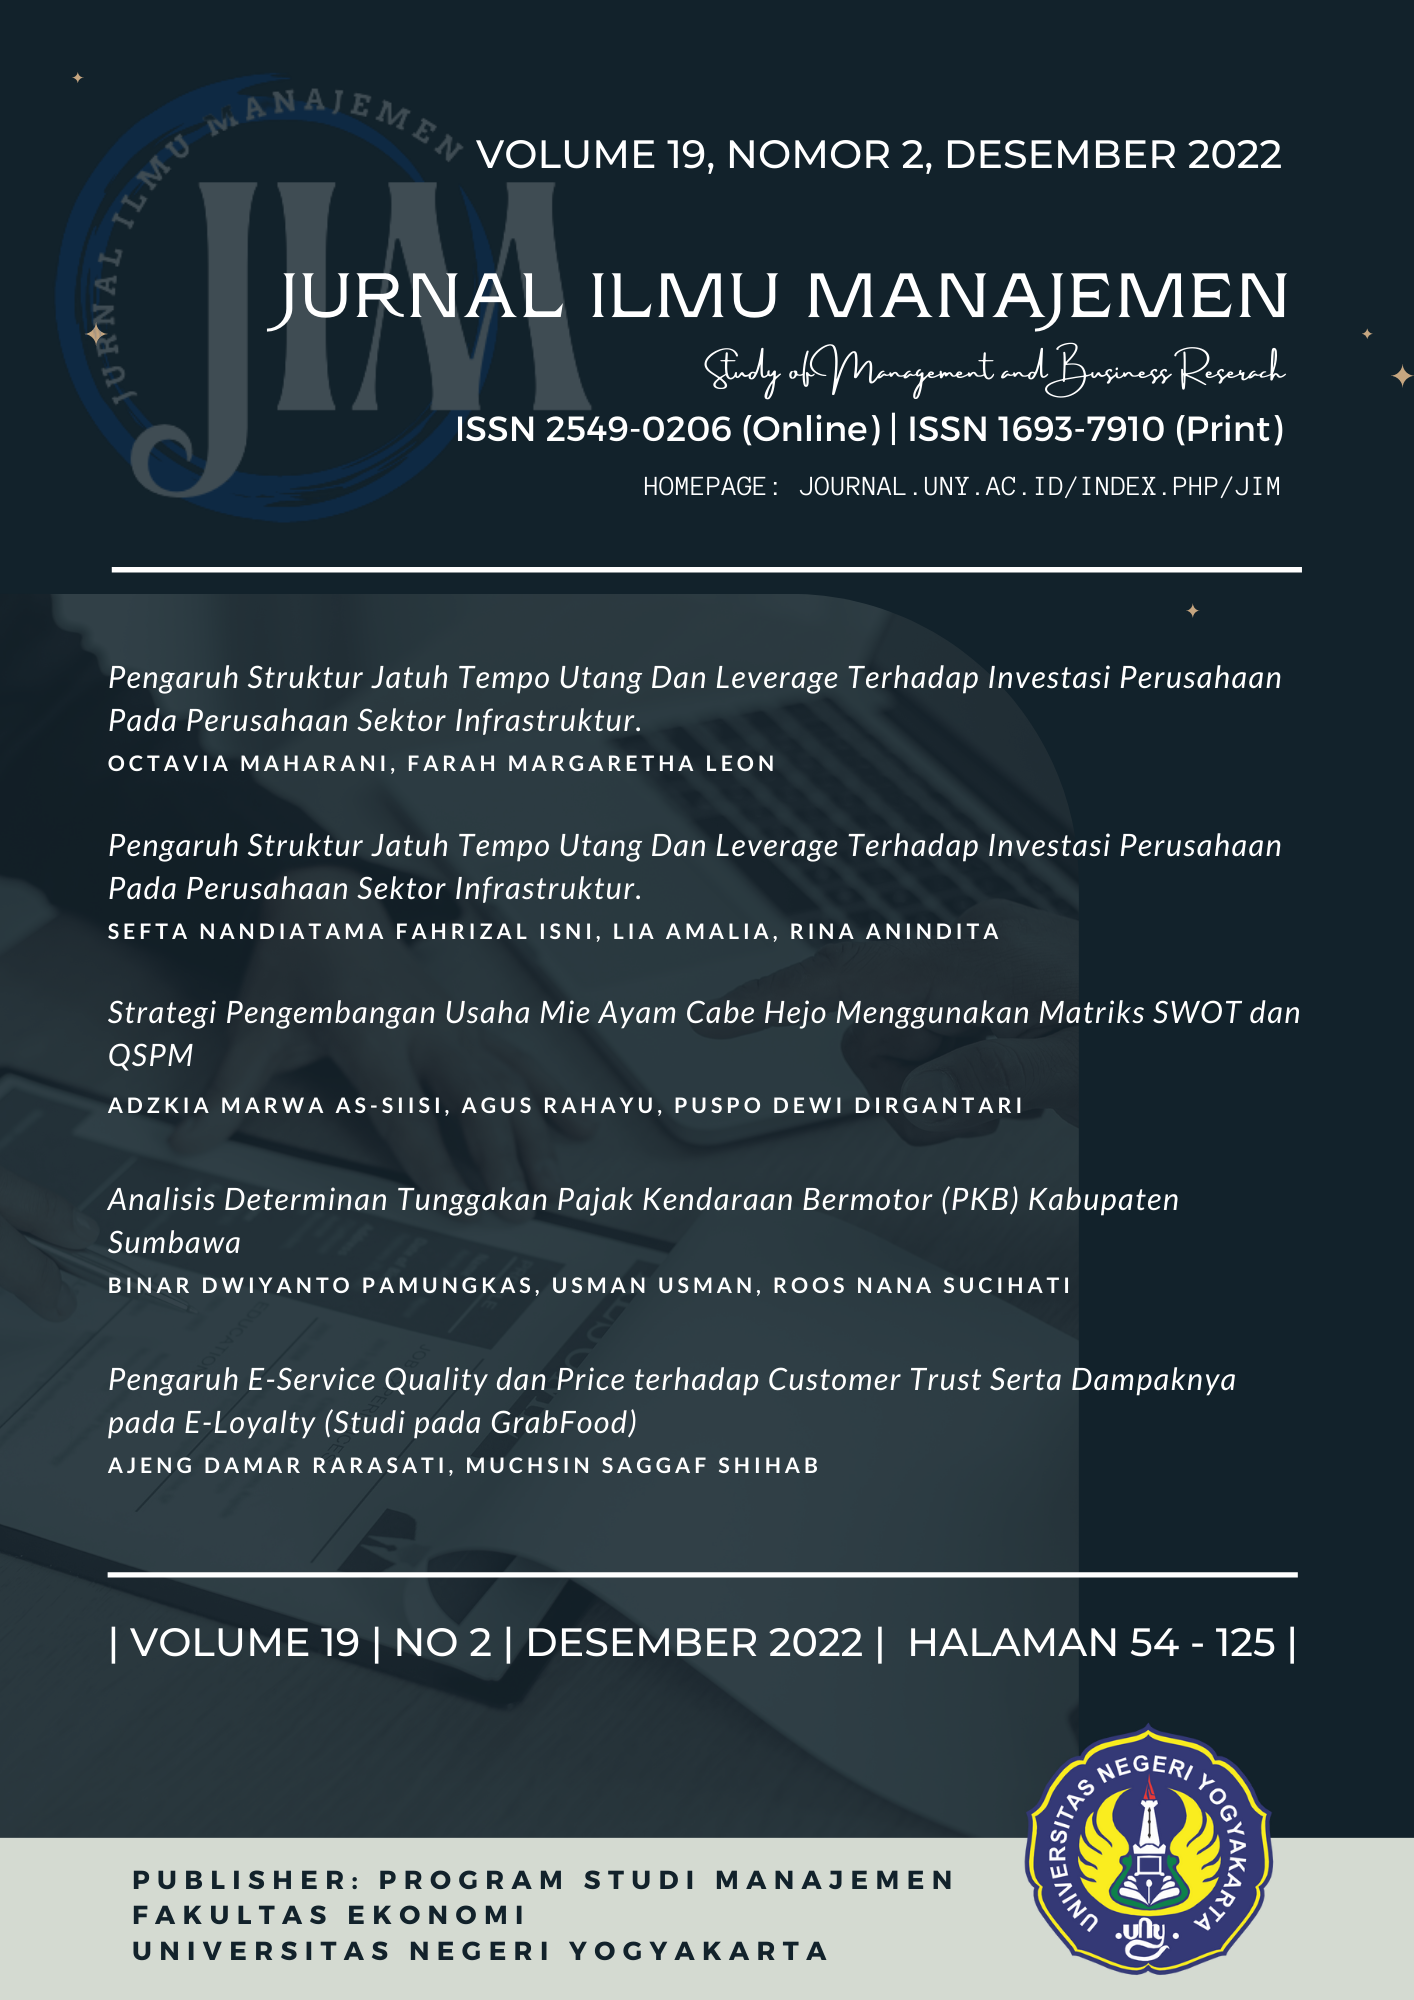 Cover JIM Vol 19 No 2 Desember 2022